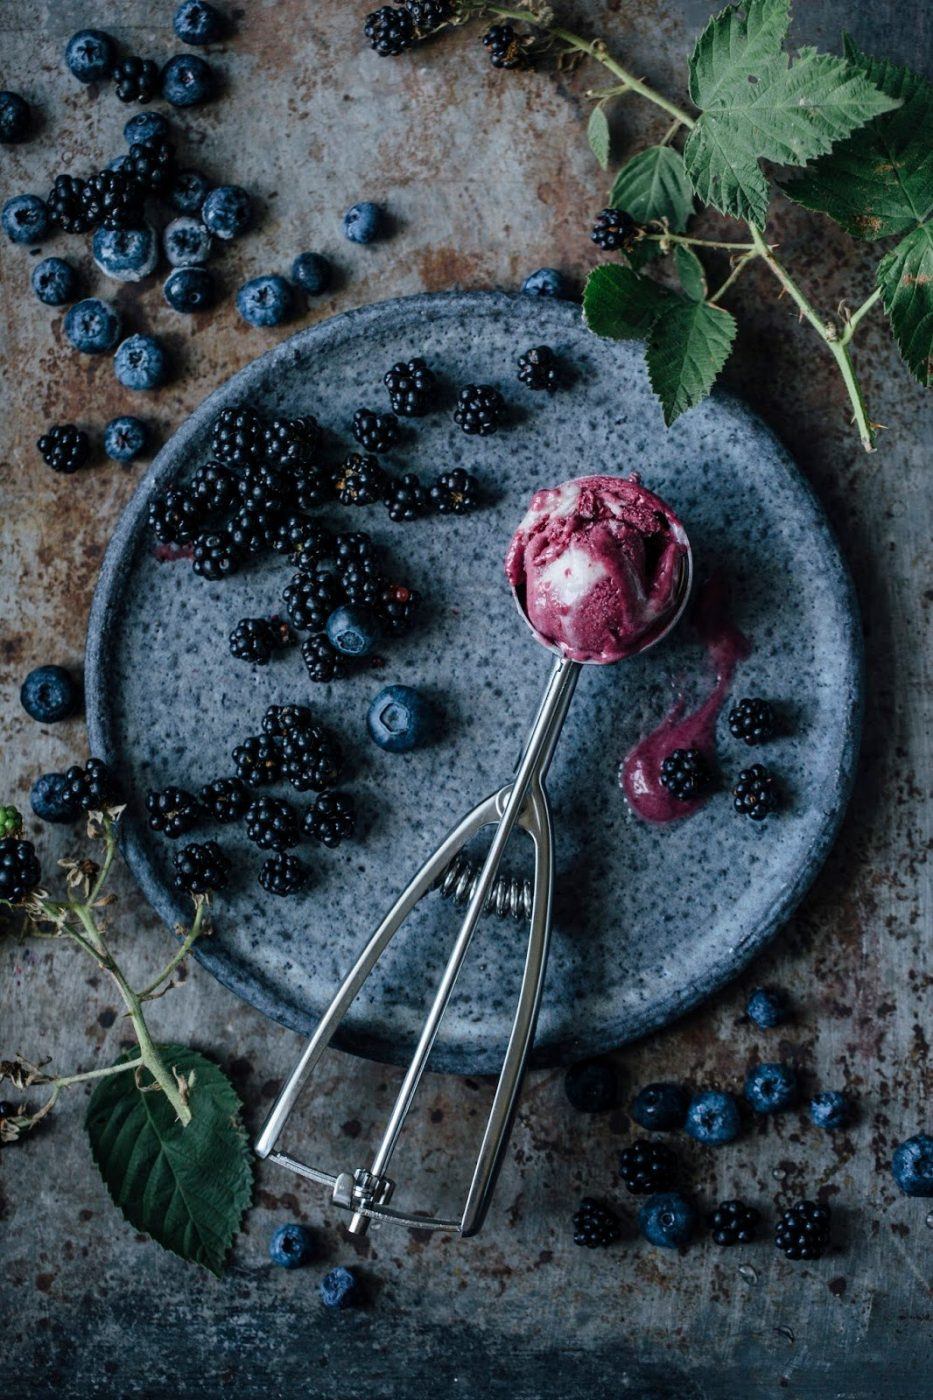 Image for Blackberry-Blueberry Ice-Cream with Banana Meringue Swirls